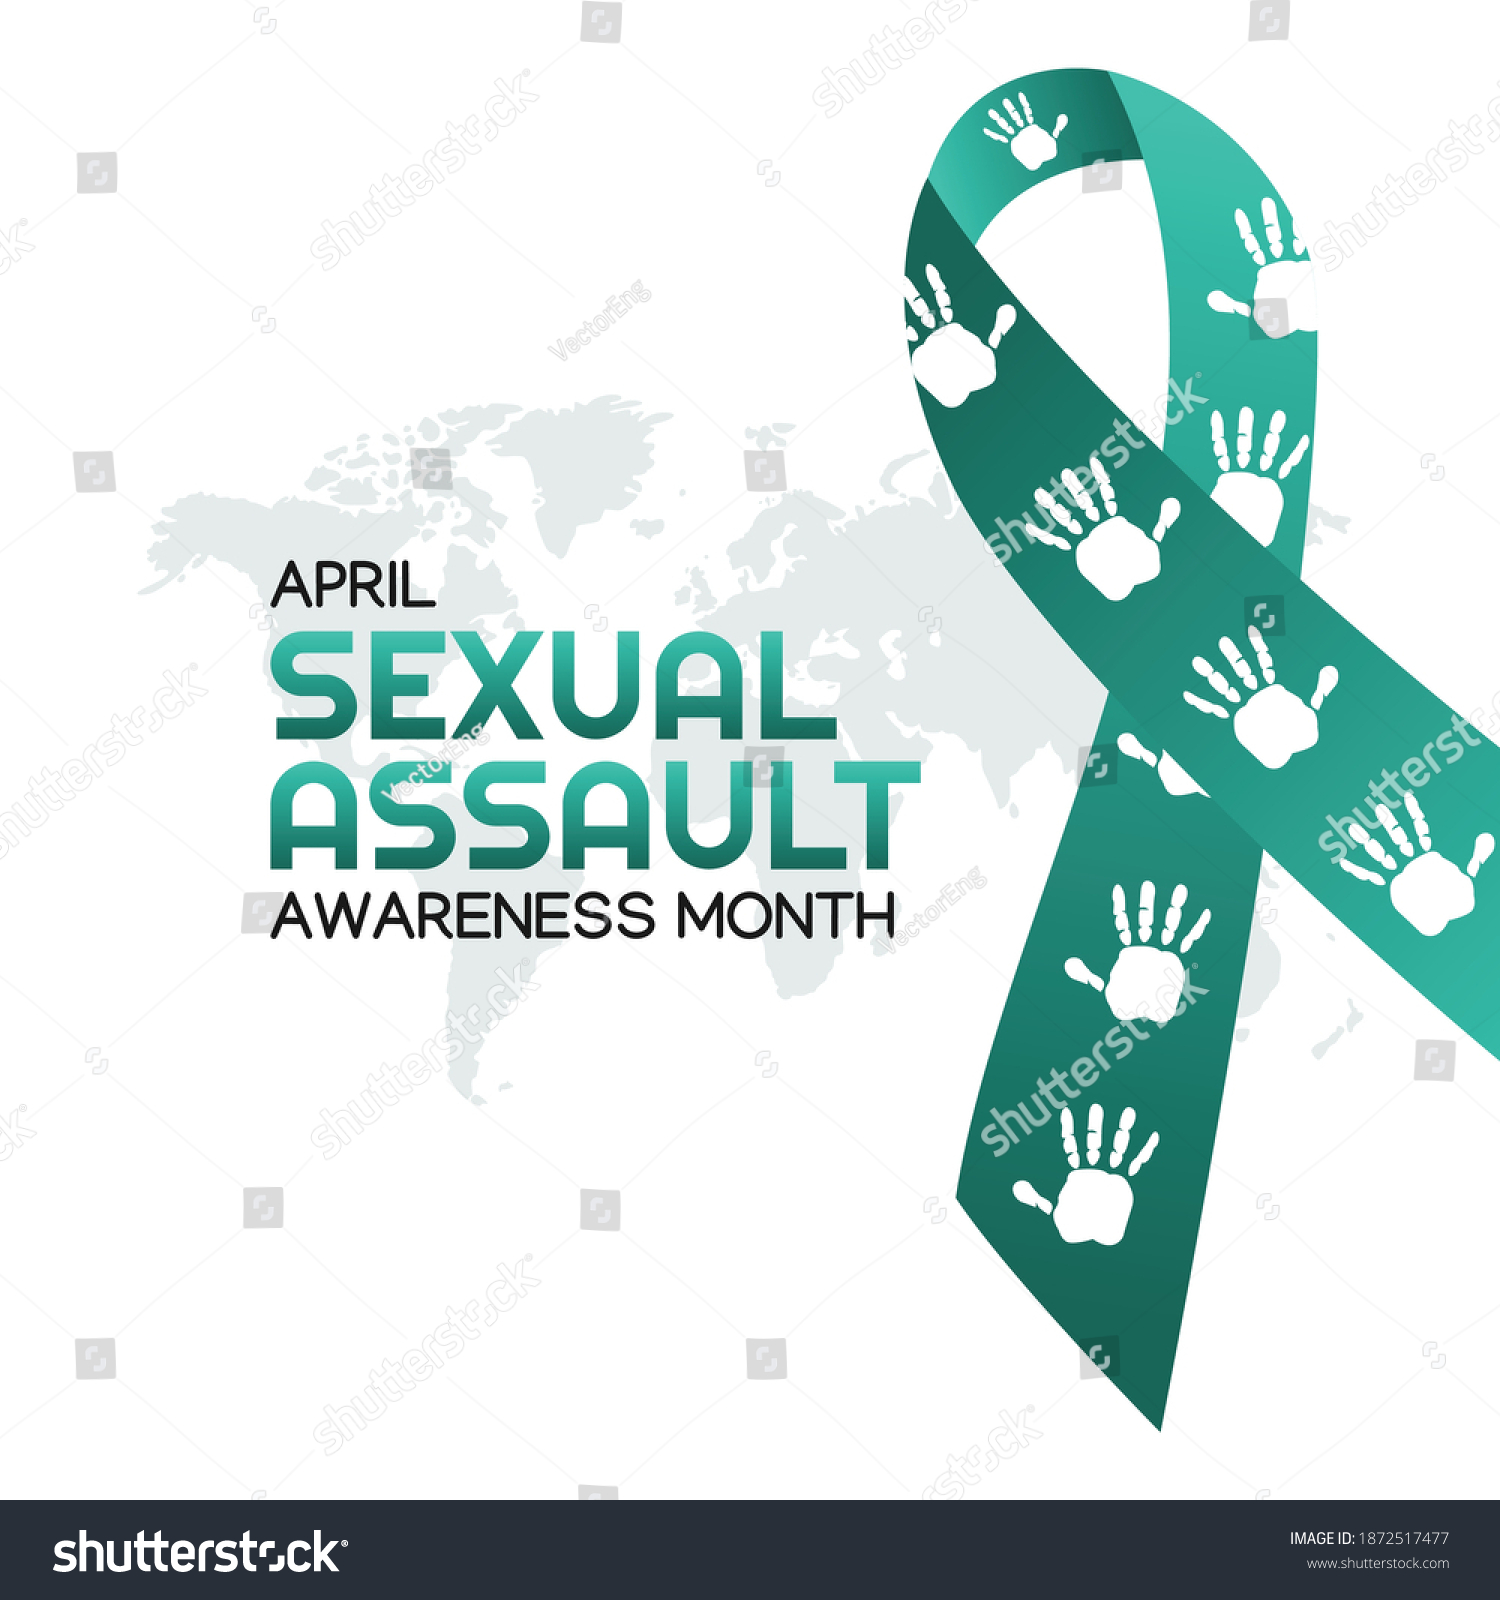 Sexual Assault Awareness Month Vector Illustration เวกเตอร์สต็อก ปลอดค่าลิขสิทธิ์ 1872517477 9707